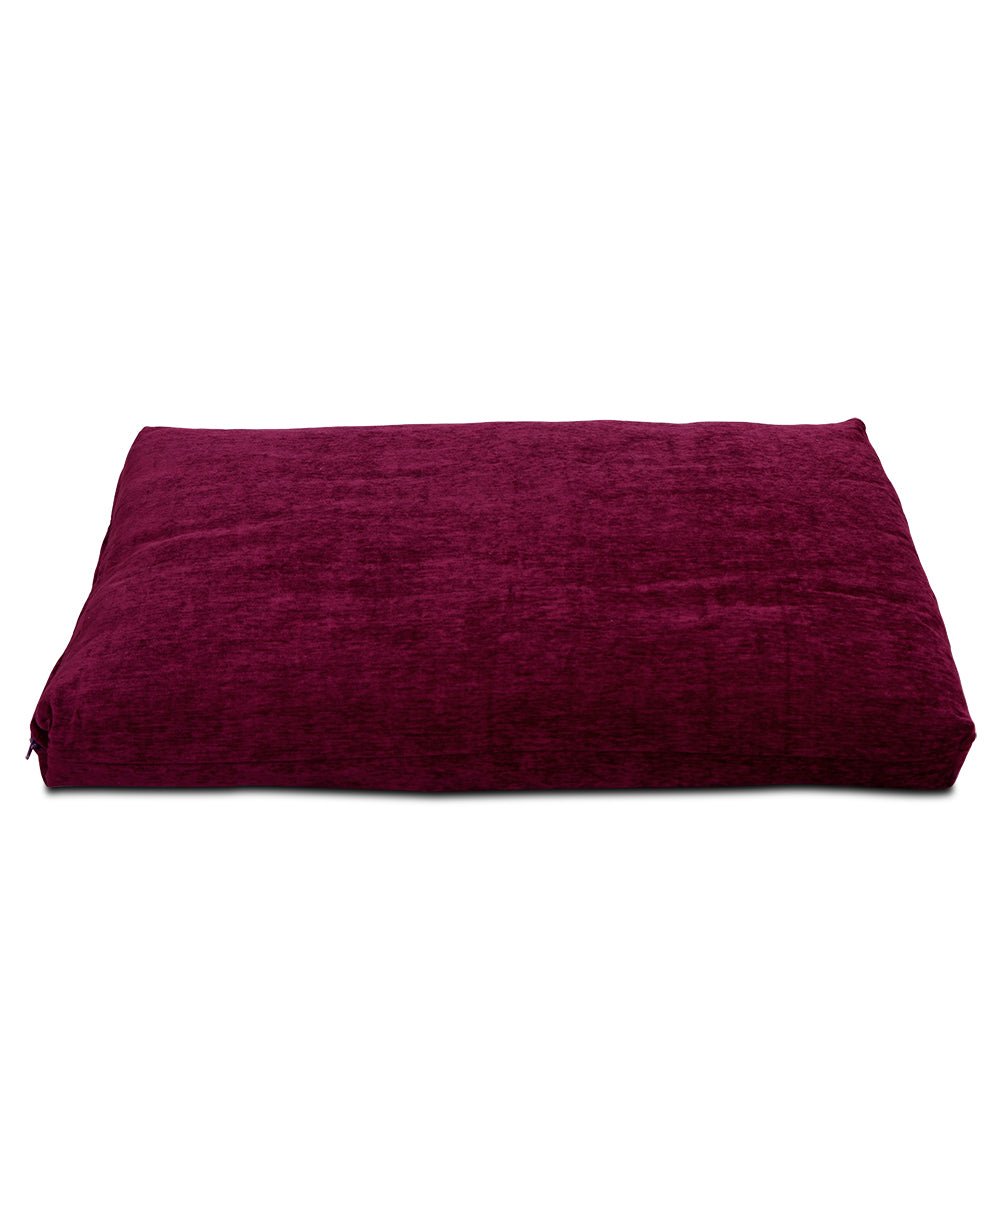 Plum Purple Chenille Zabuton Meditation Cushion - Massage Cushions